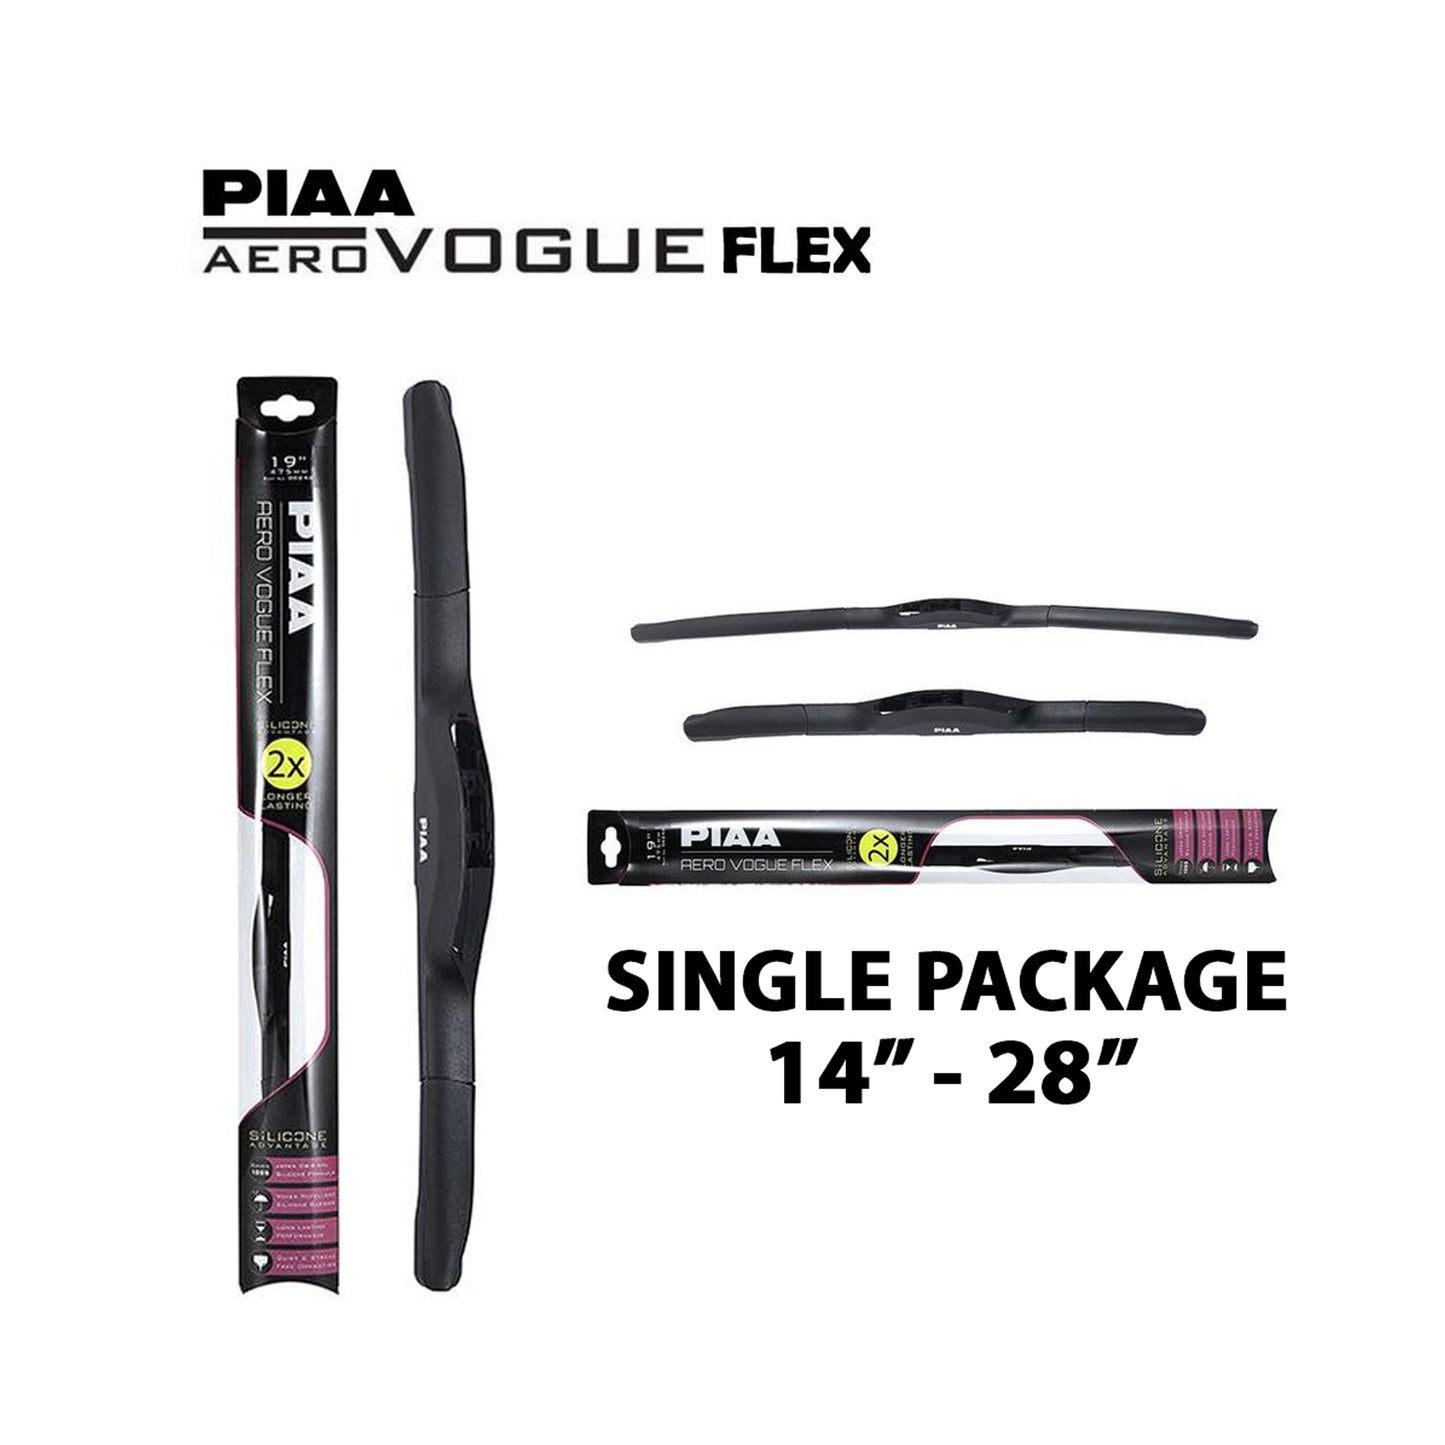 PIAA AERO VOGUE FLEX Car Wiper ( 24" ) - Black (Barcode: 4960311050995 )